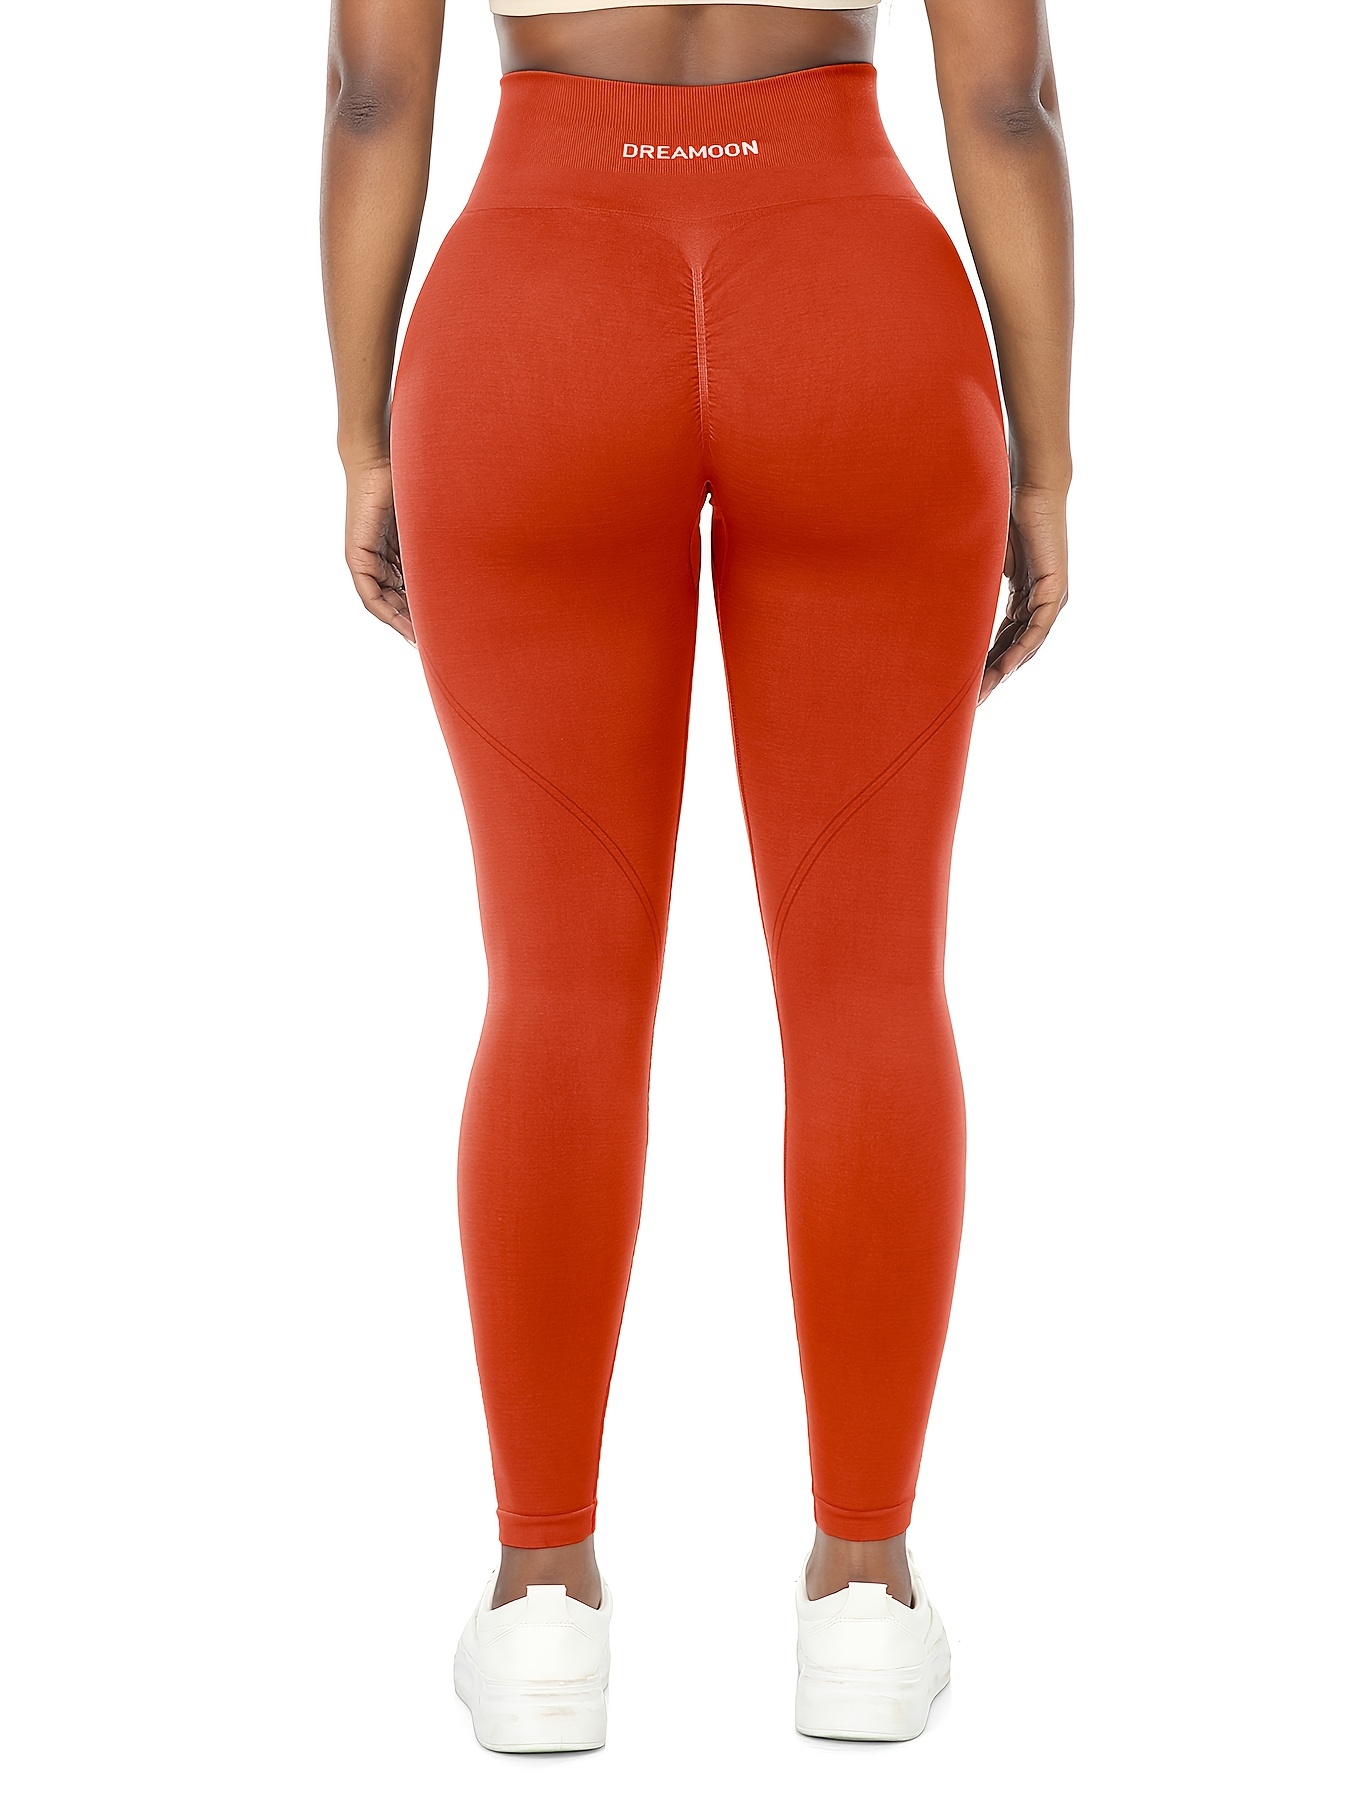 NVGTN Burnt Orange Speckled Seamless Leggings for Women High Waist Yoga  Pants Scrunch Butt Lifting Elastic Tights 